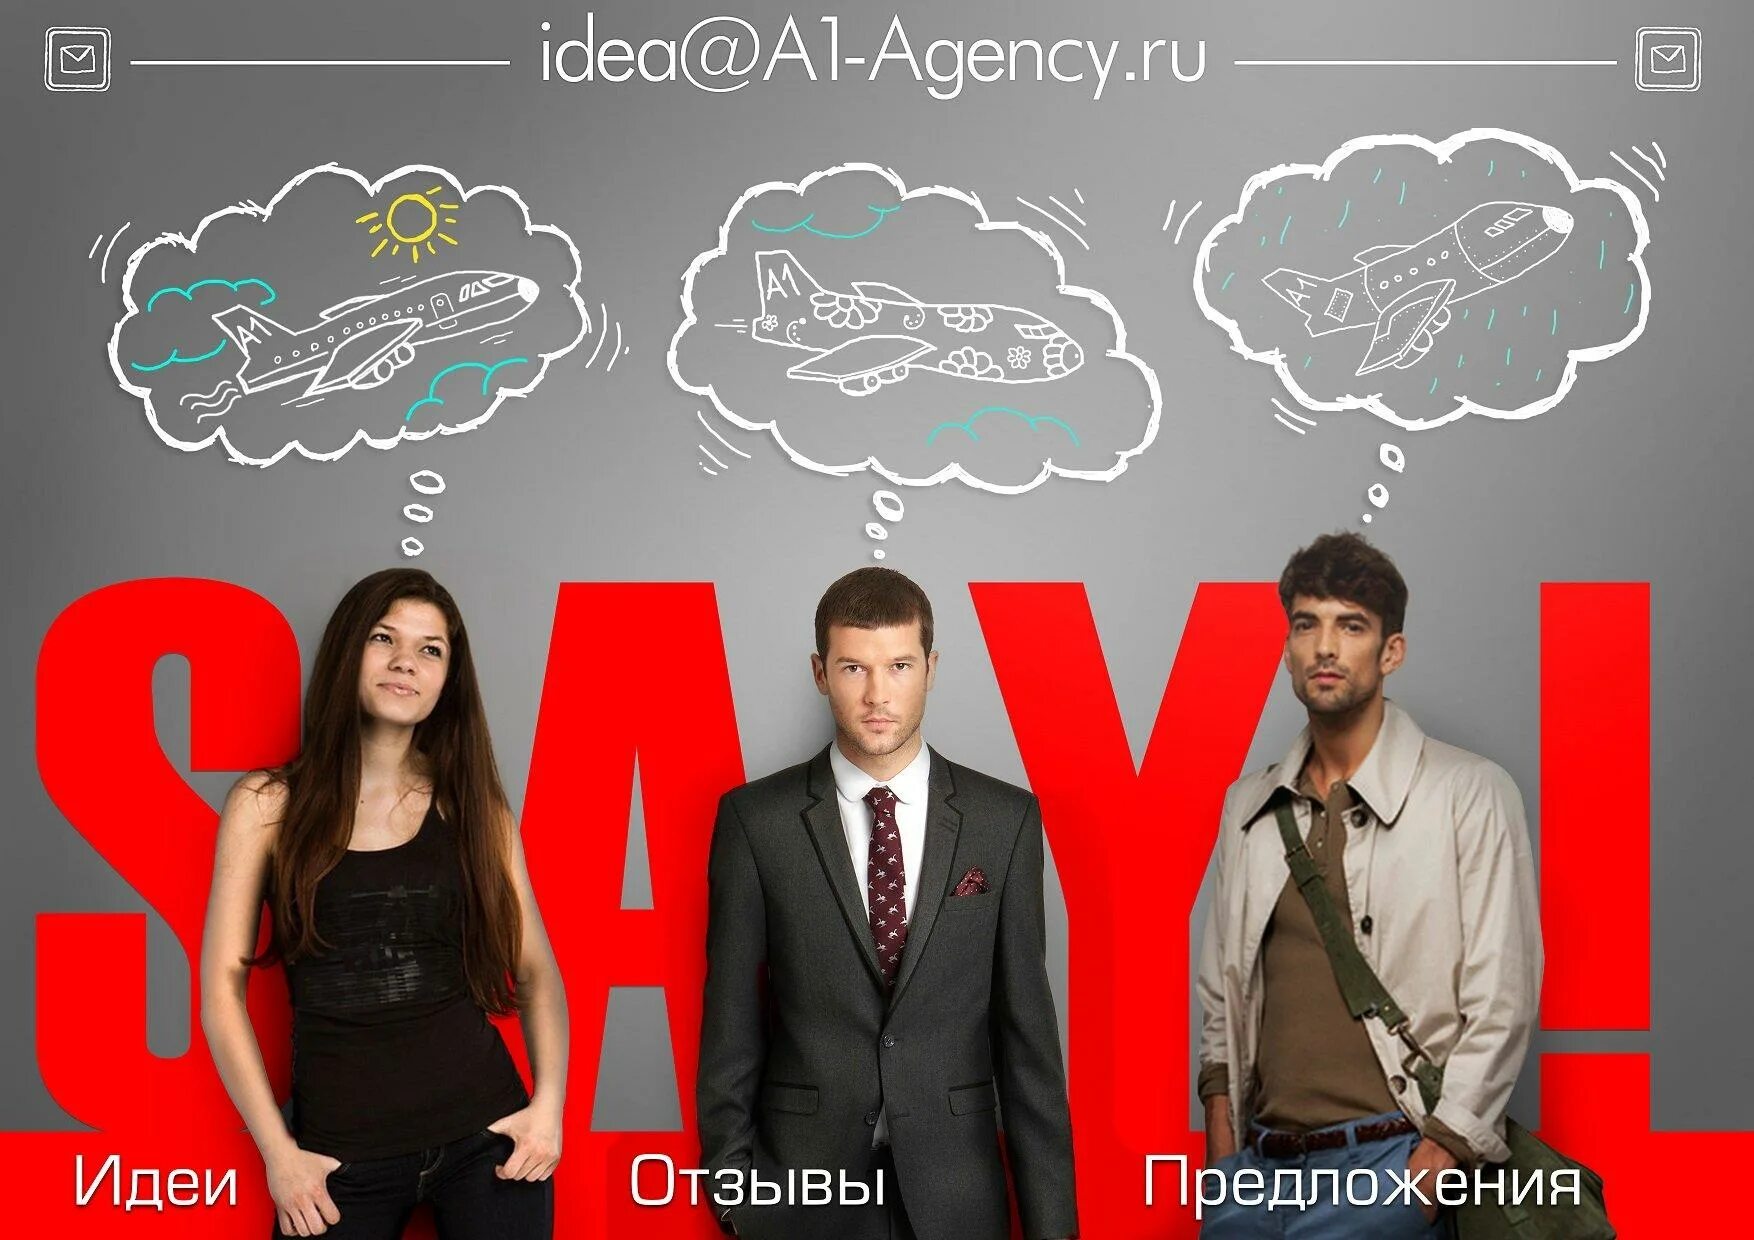 Agency 1. БТЛ агентство. А1 агентство. Специалист в рекламных или PR-агентствах. BTL агентство Москва.